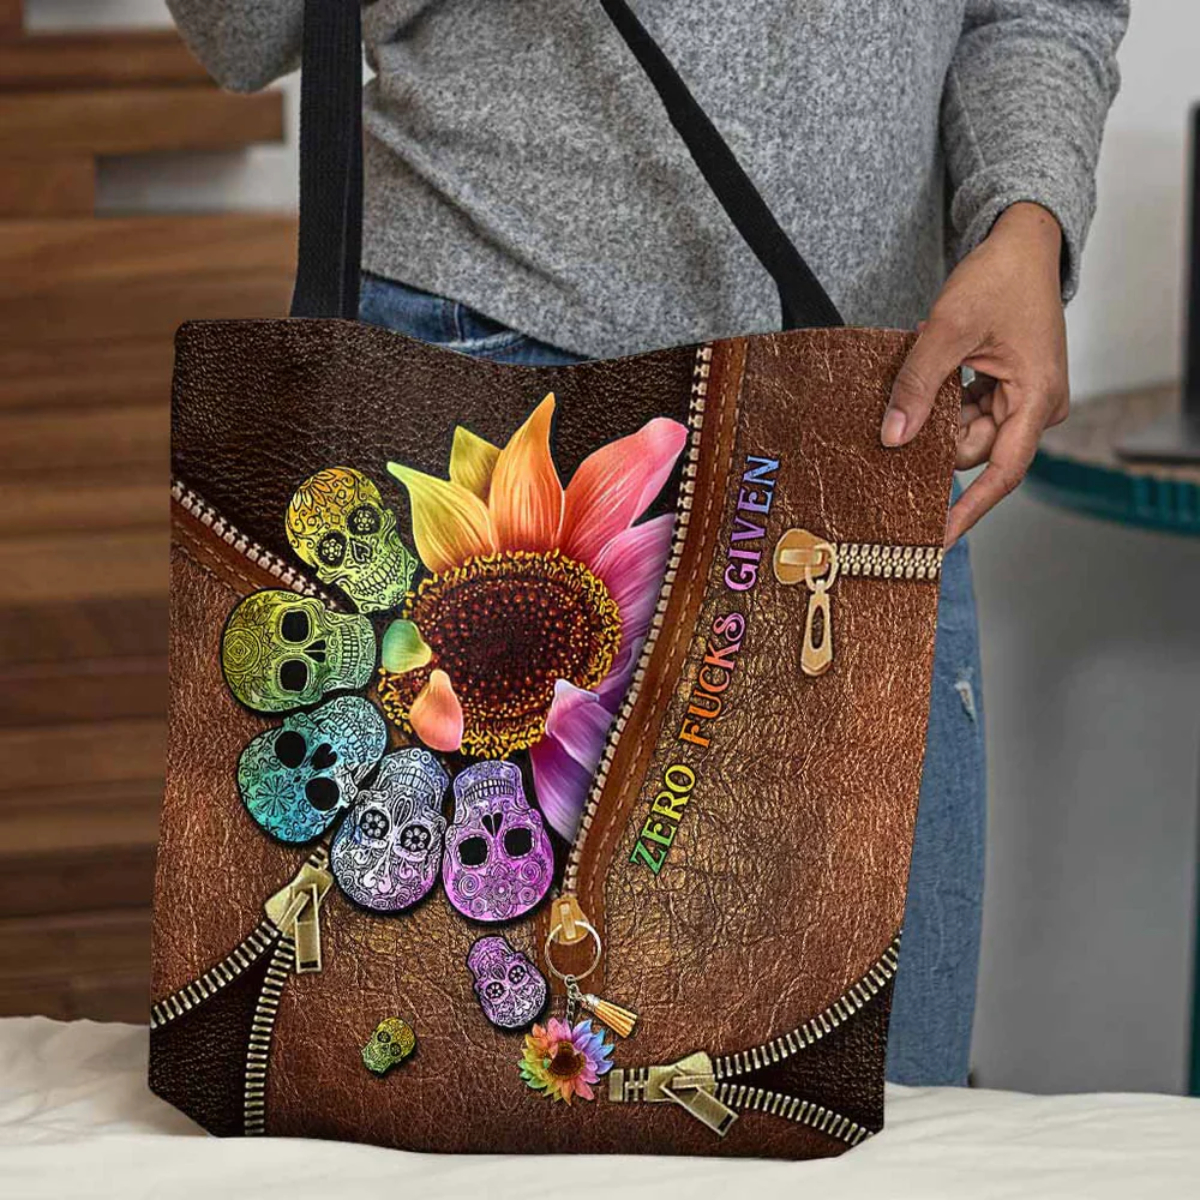 Anna by Anushka Hand Painted Leather Butterfly Handbag Purse | eBay